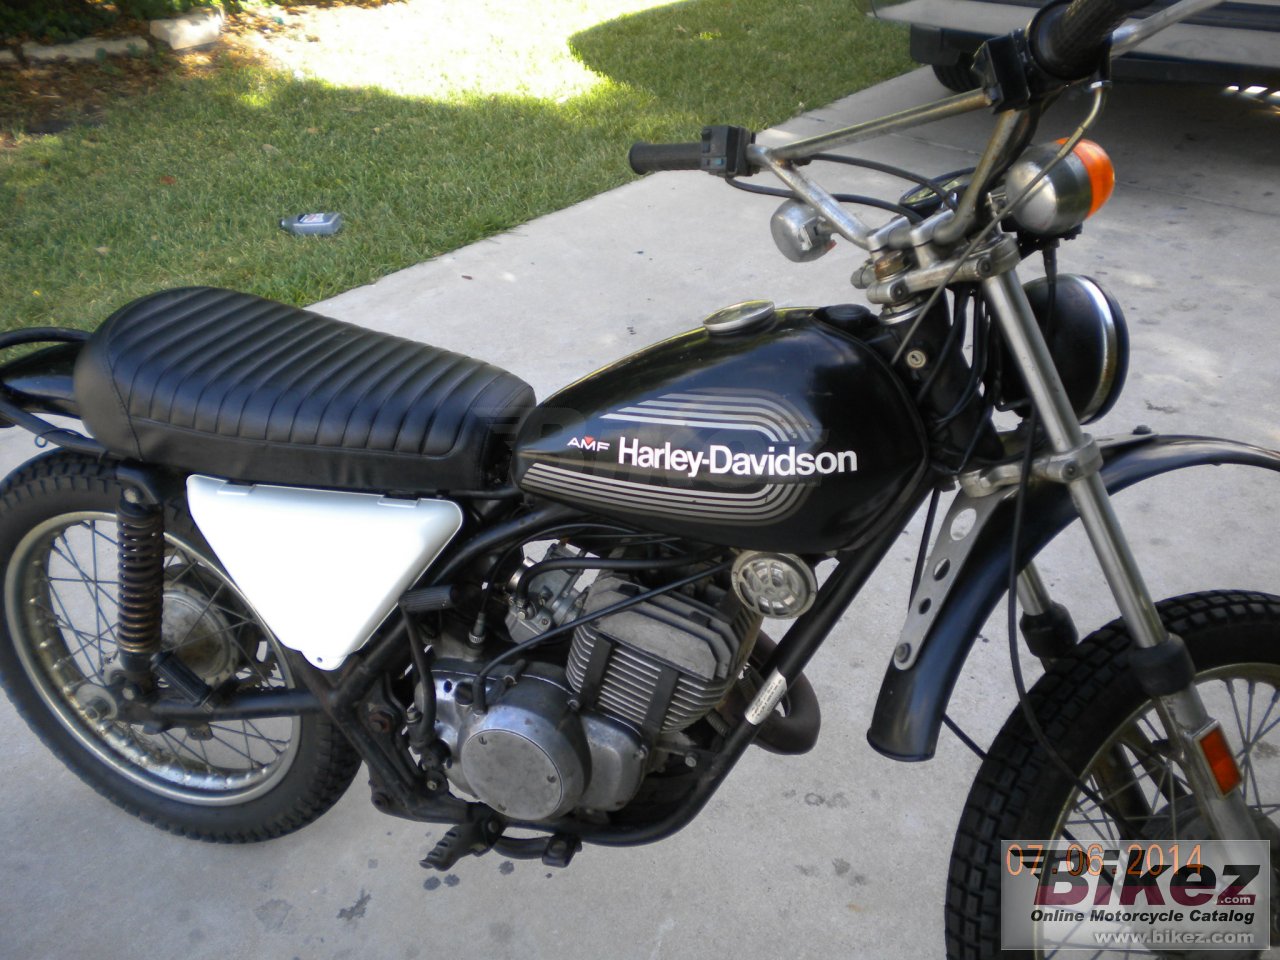 Harley-Davidson SX 175